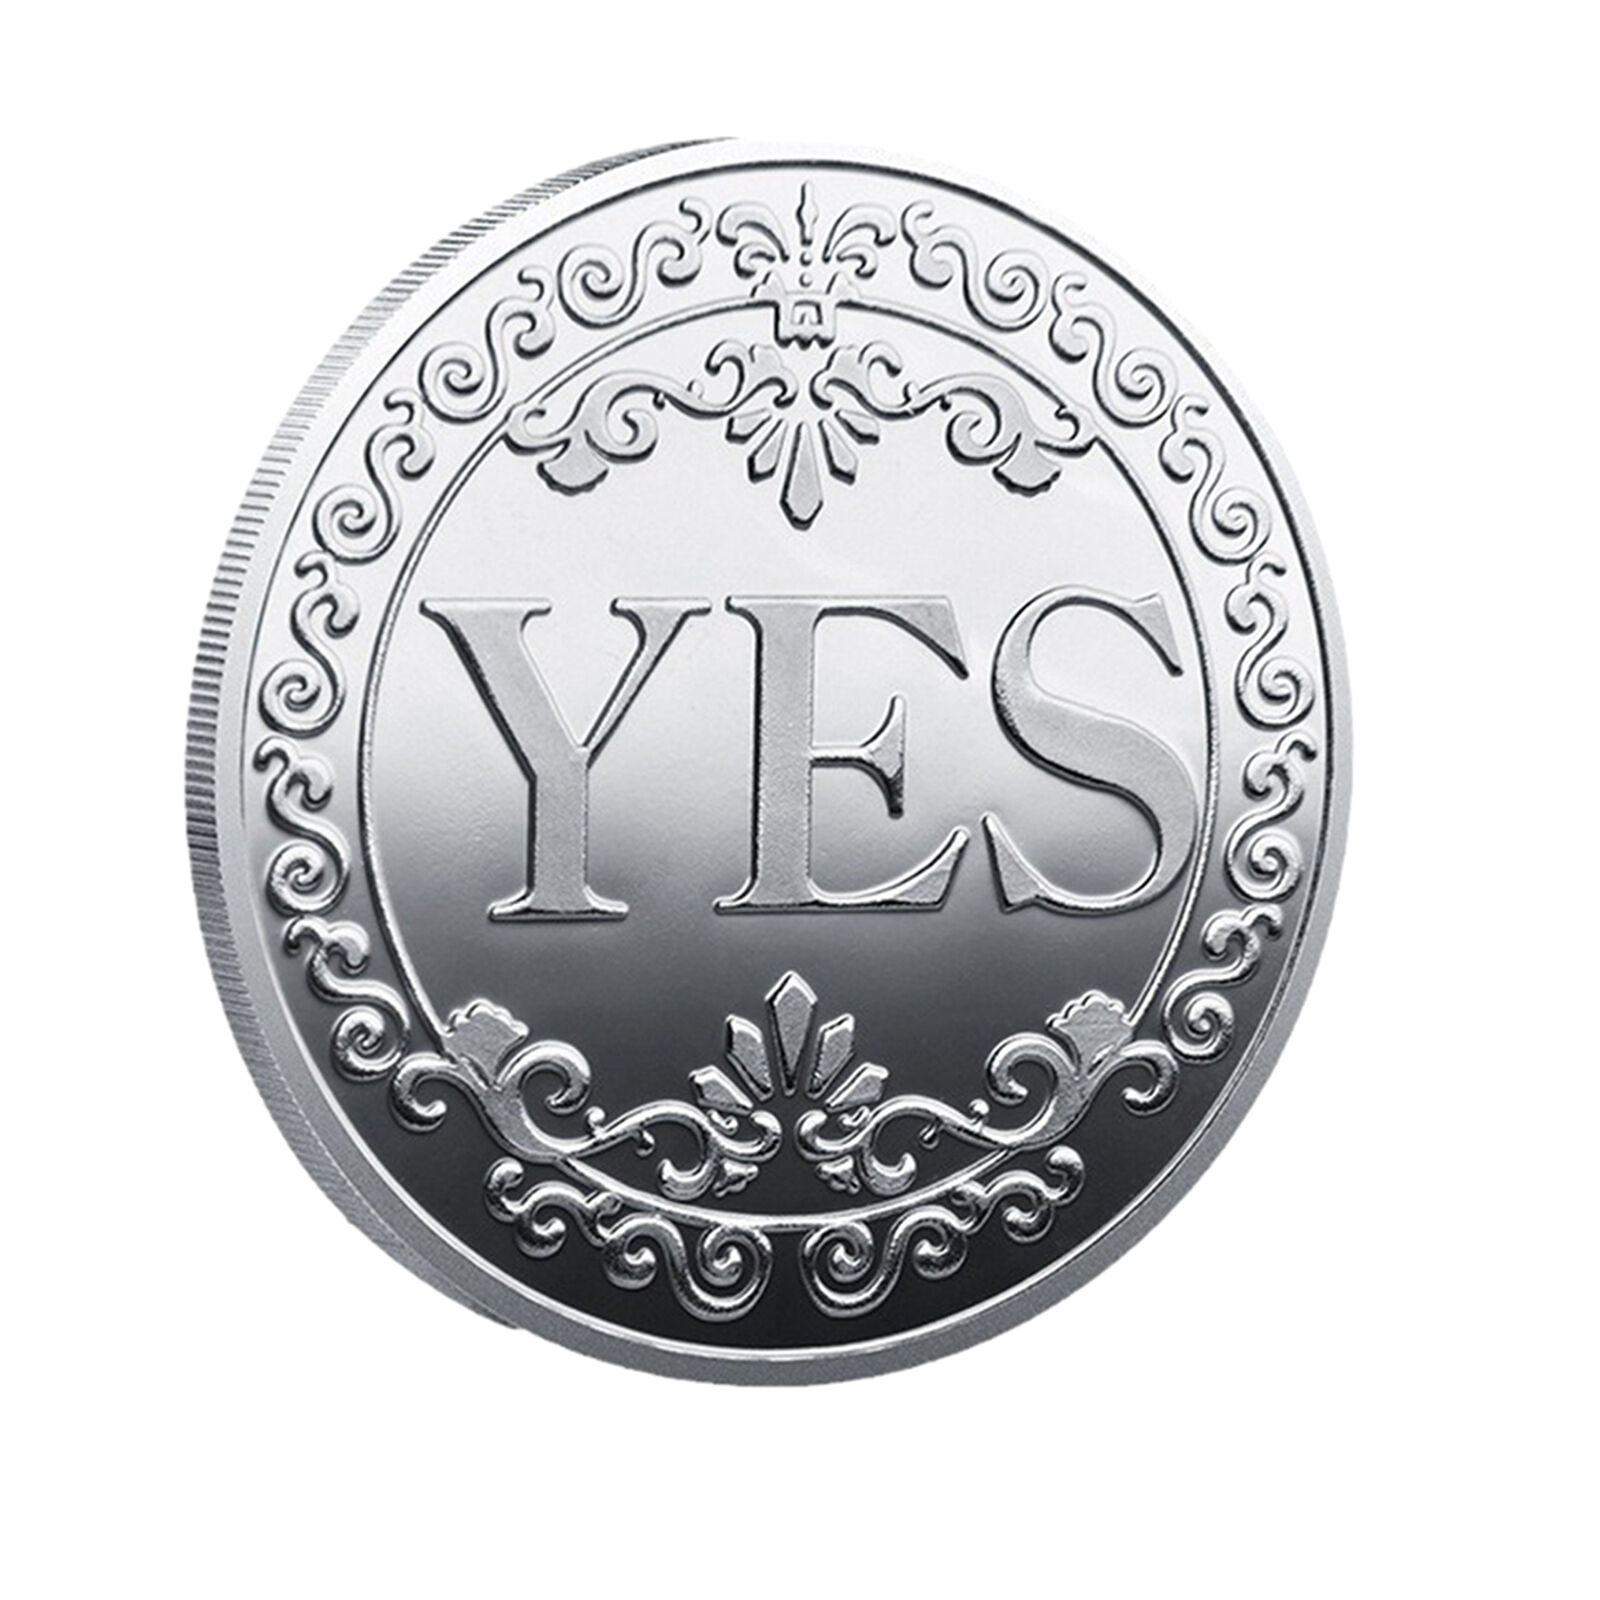 1pc Yes/No Coin Metal Prediction Decision Coin Decision Maker Lucky Coin